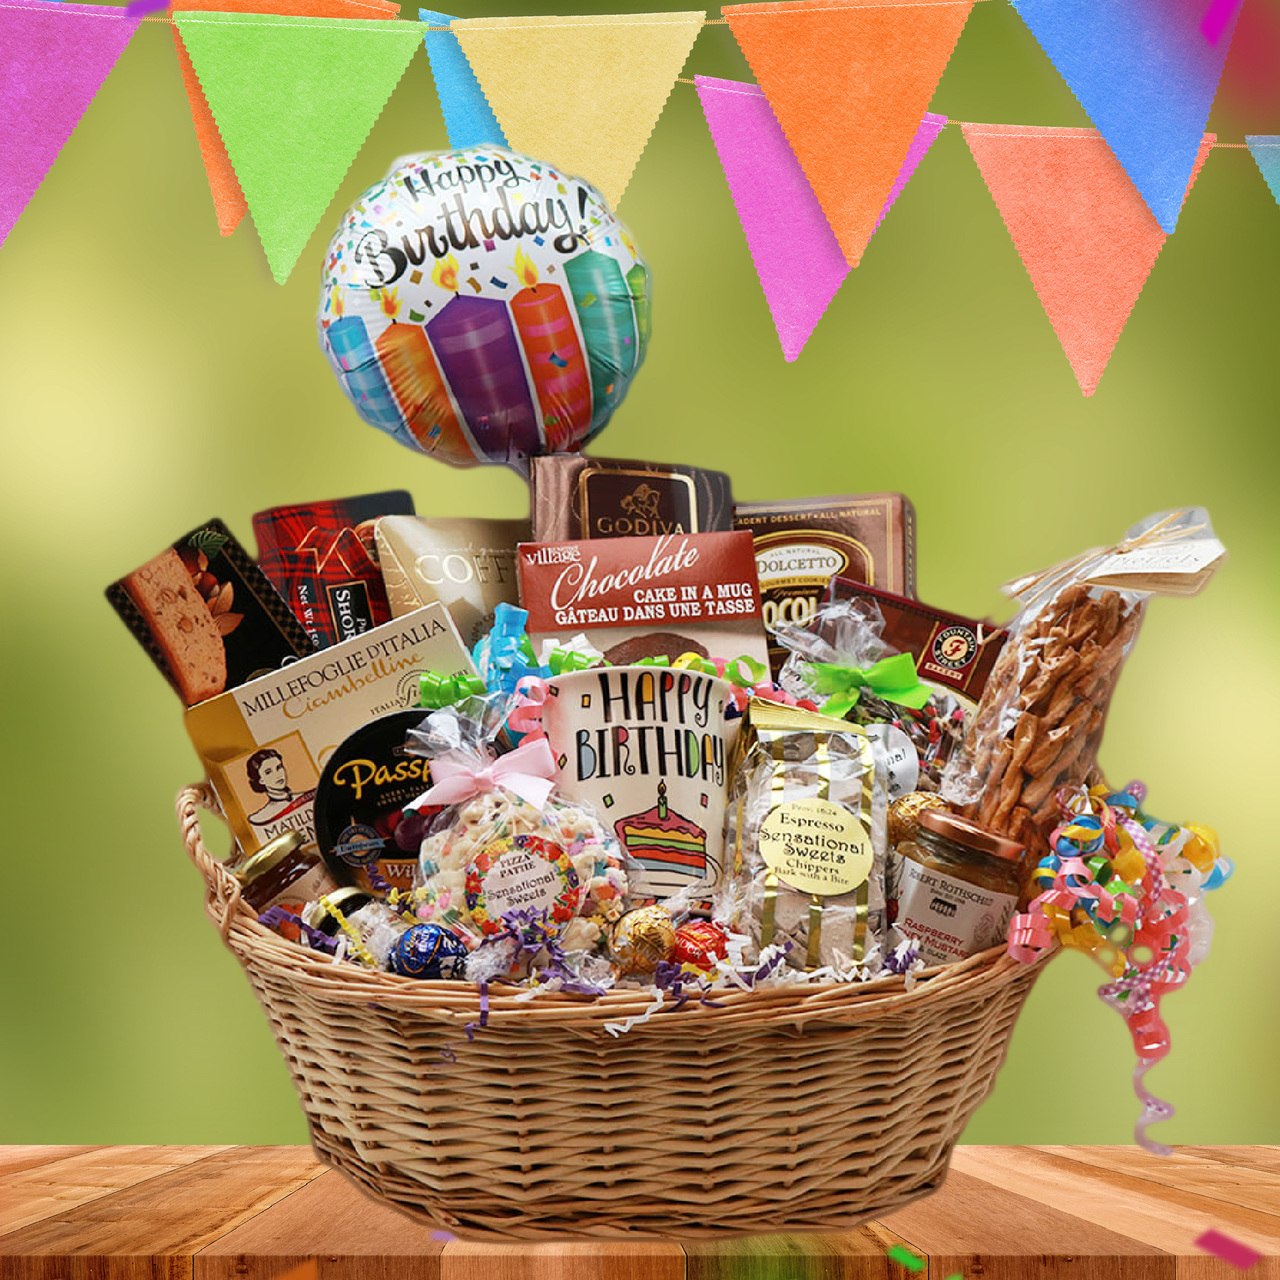 Happy Birthday Chocolate | Buy Chocolate Happy Birthday Gifts by Dallmann